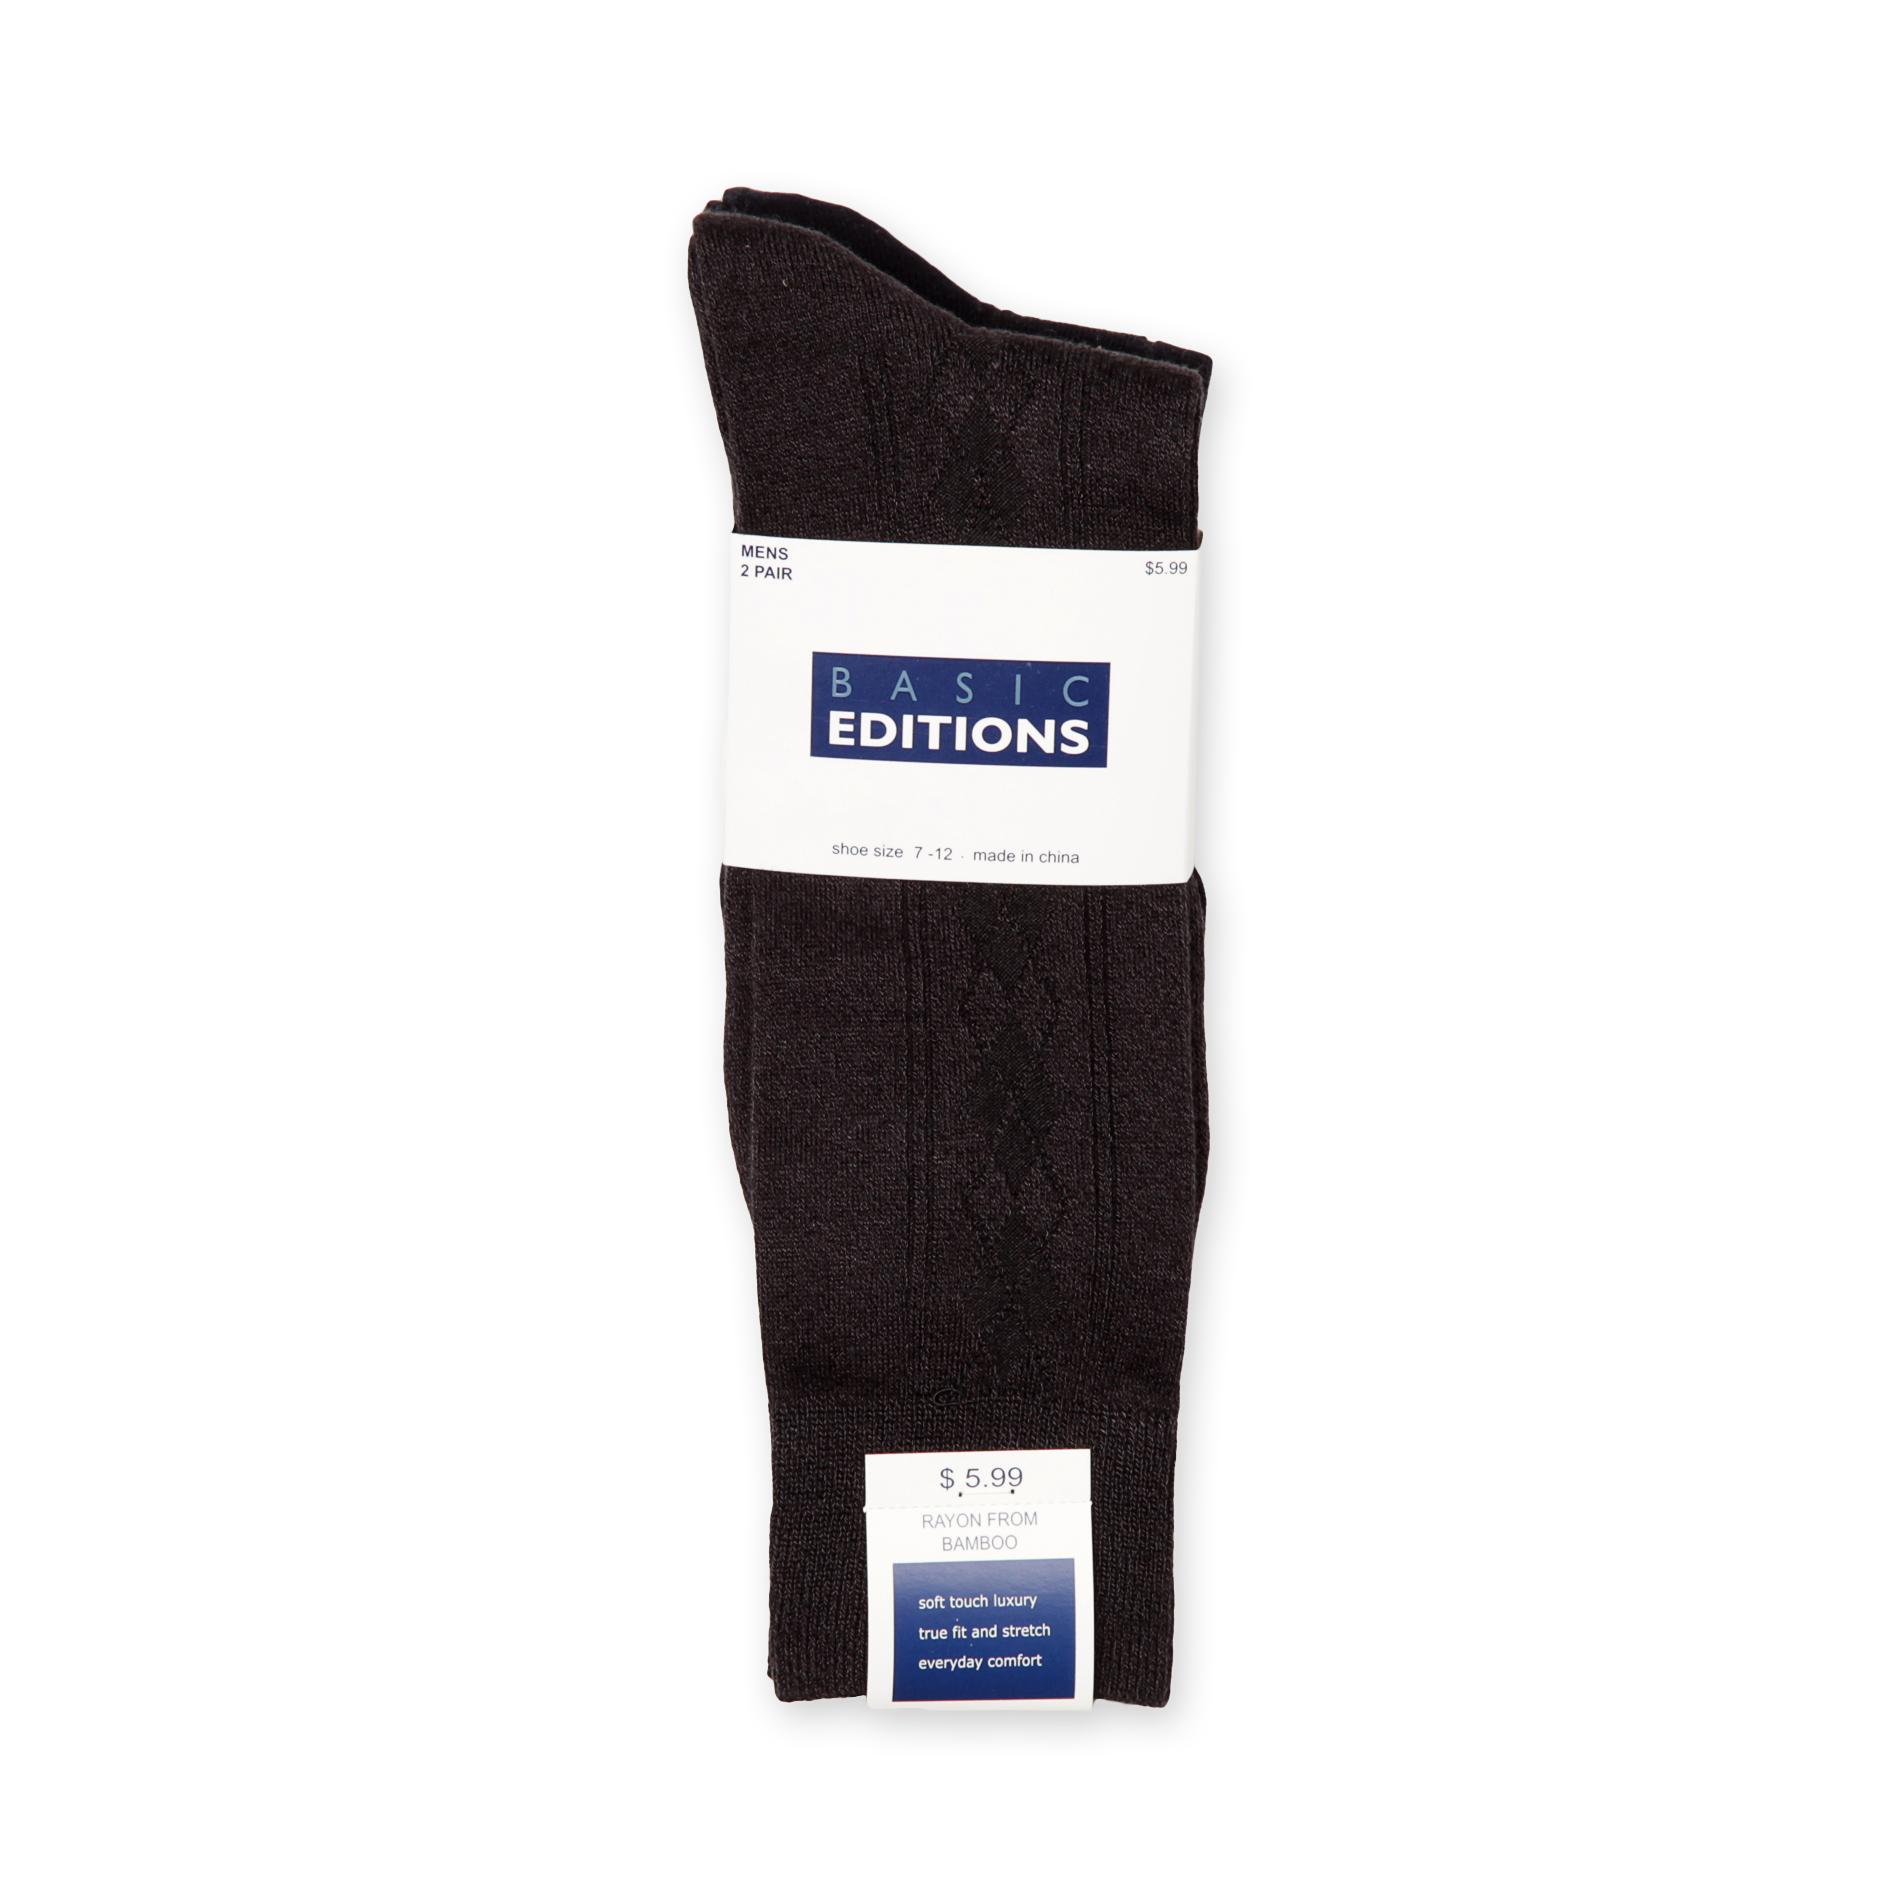 Basic Editions Men's 2-Pairs Dress Socks - Jacquard Pattern